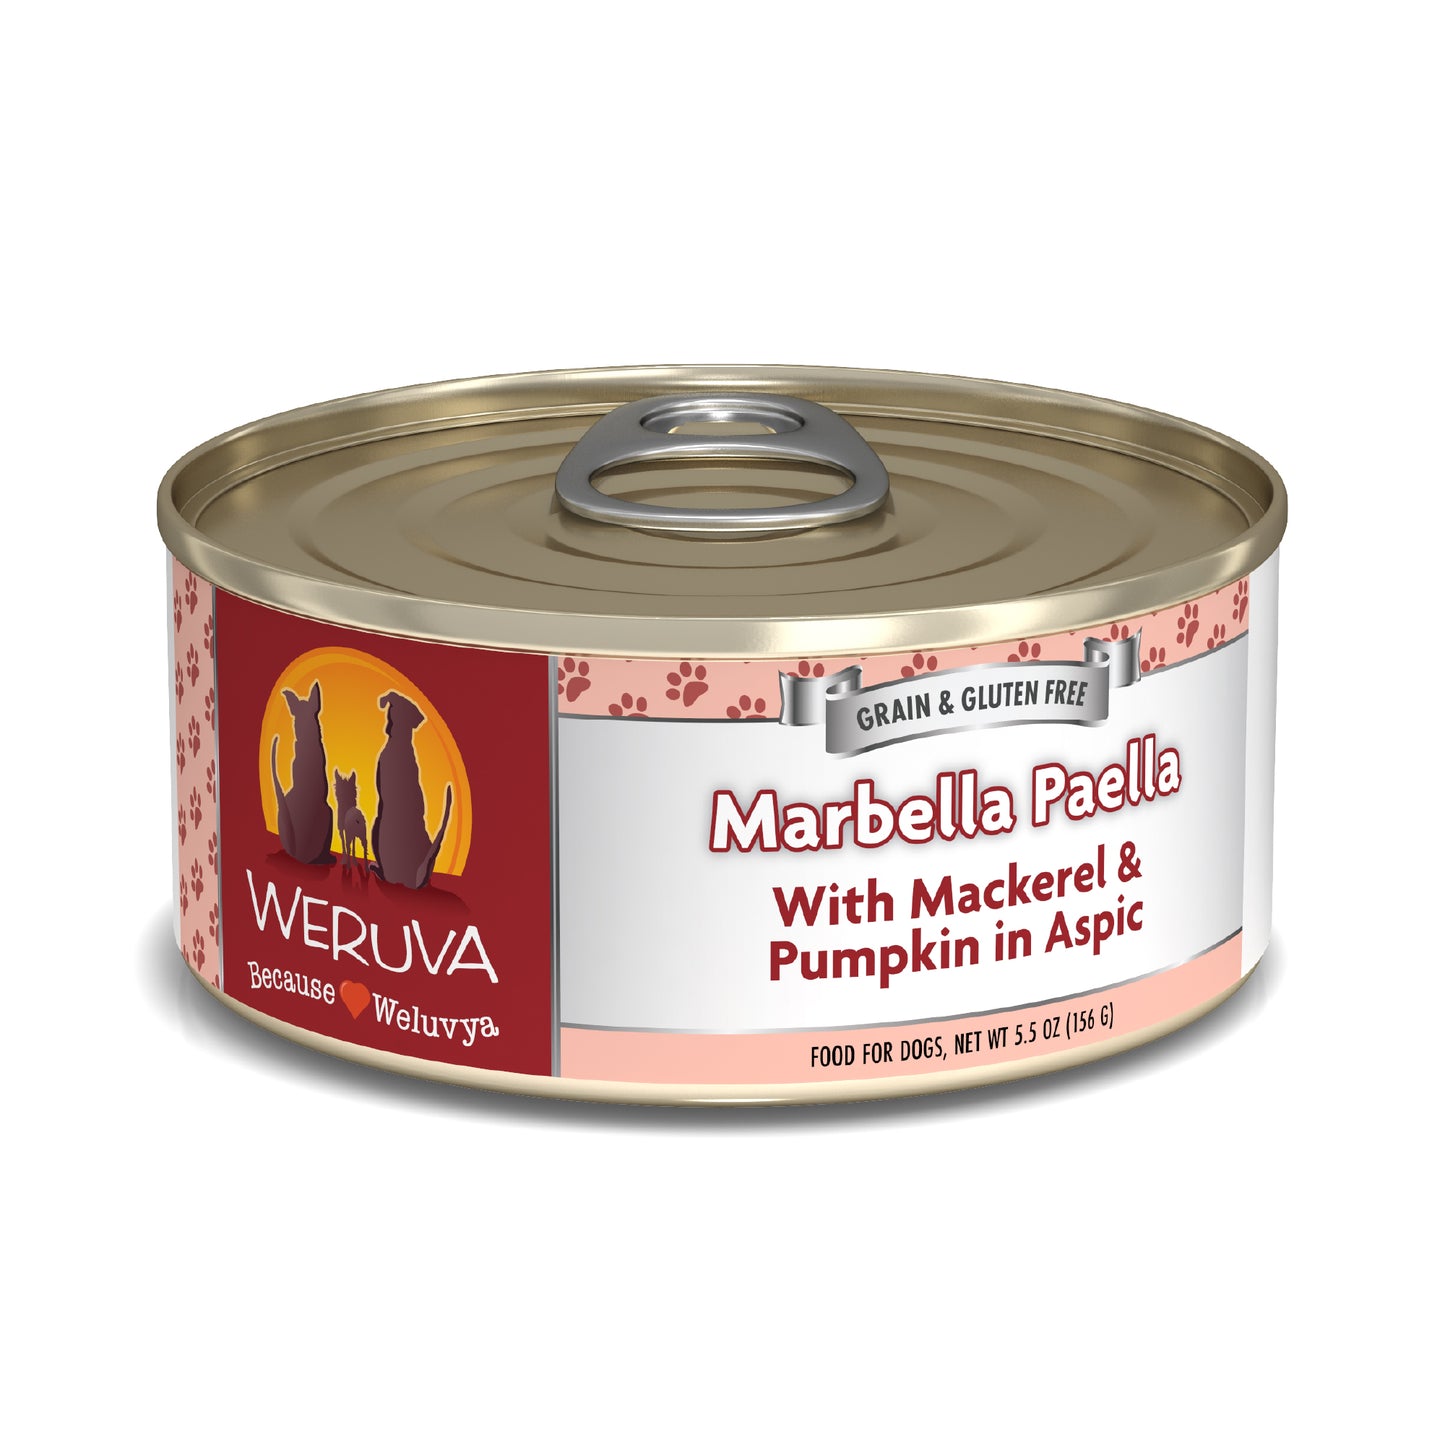 Weruva Classic Dog food 5.5oz Can Marbella Paella